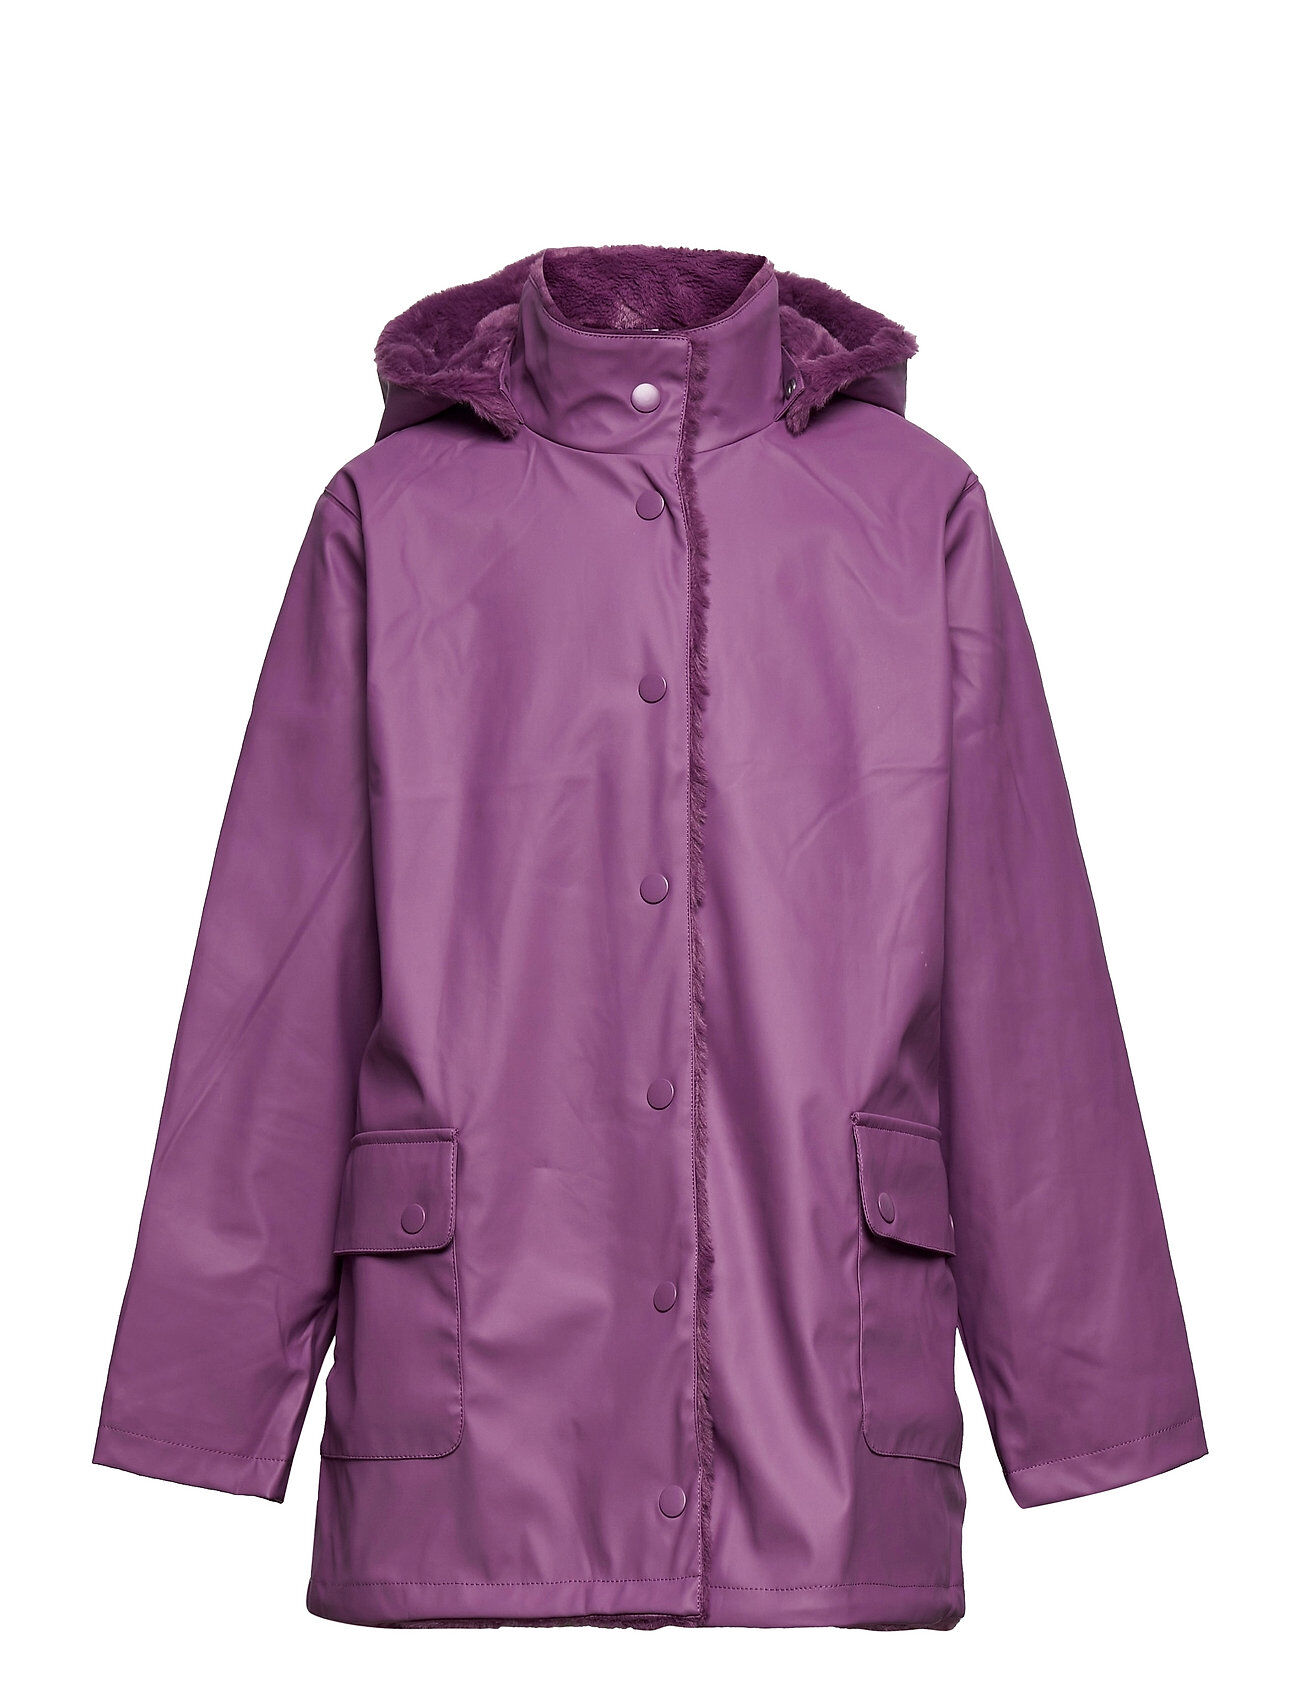 Lindex Raincoat Fur Lined Outerwear Rainwear Jackets Lilla Lindex